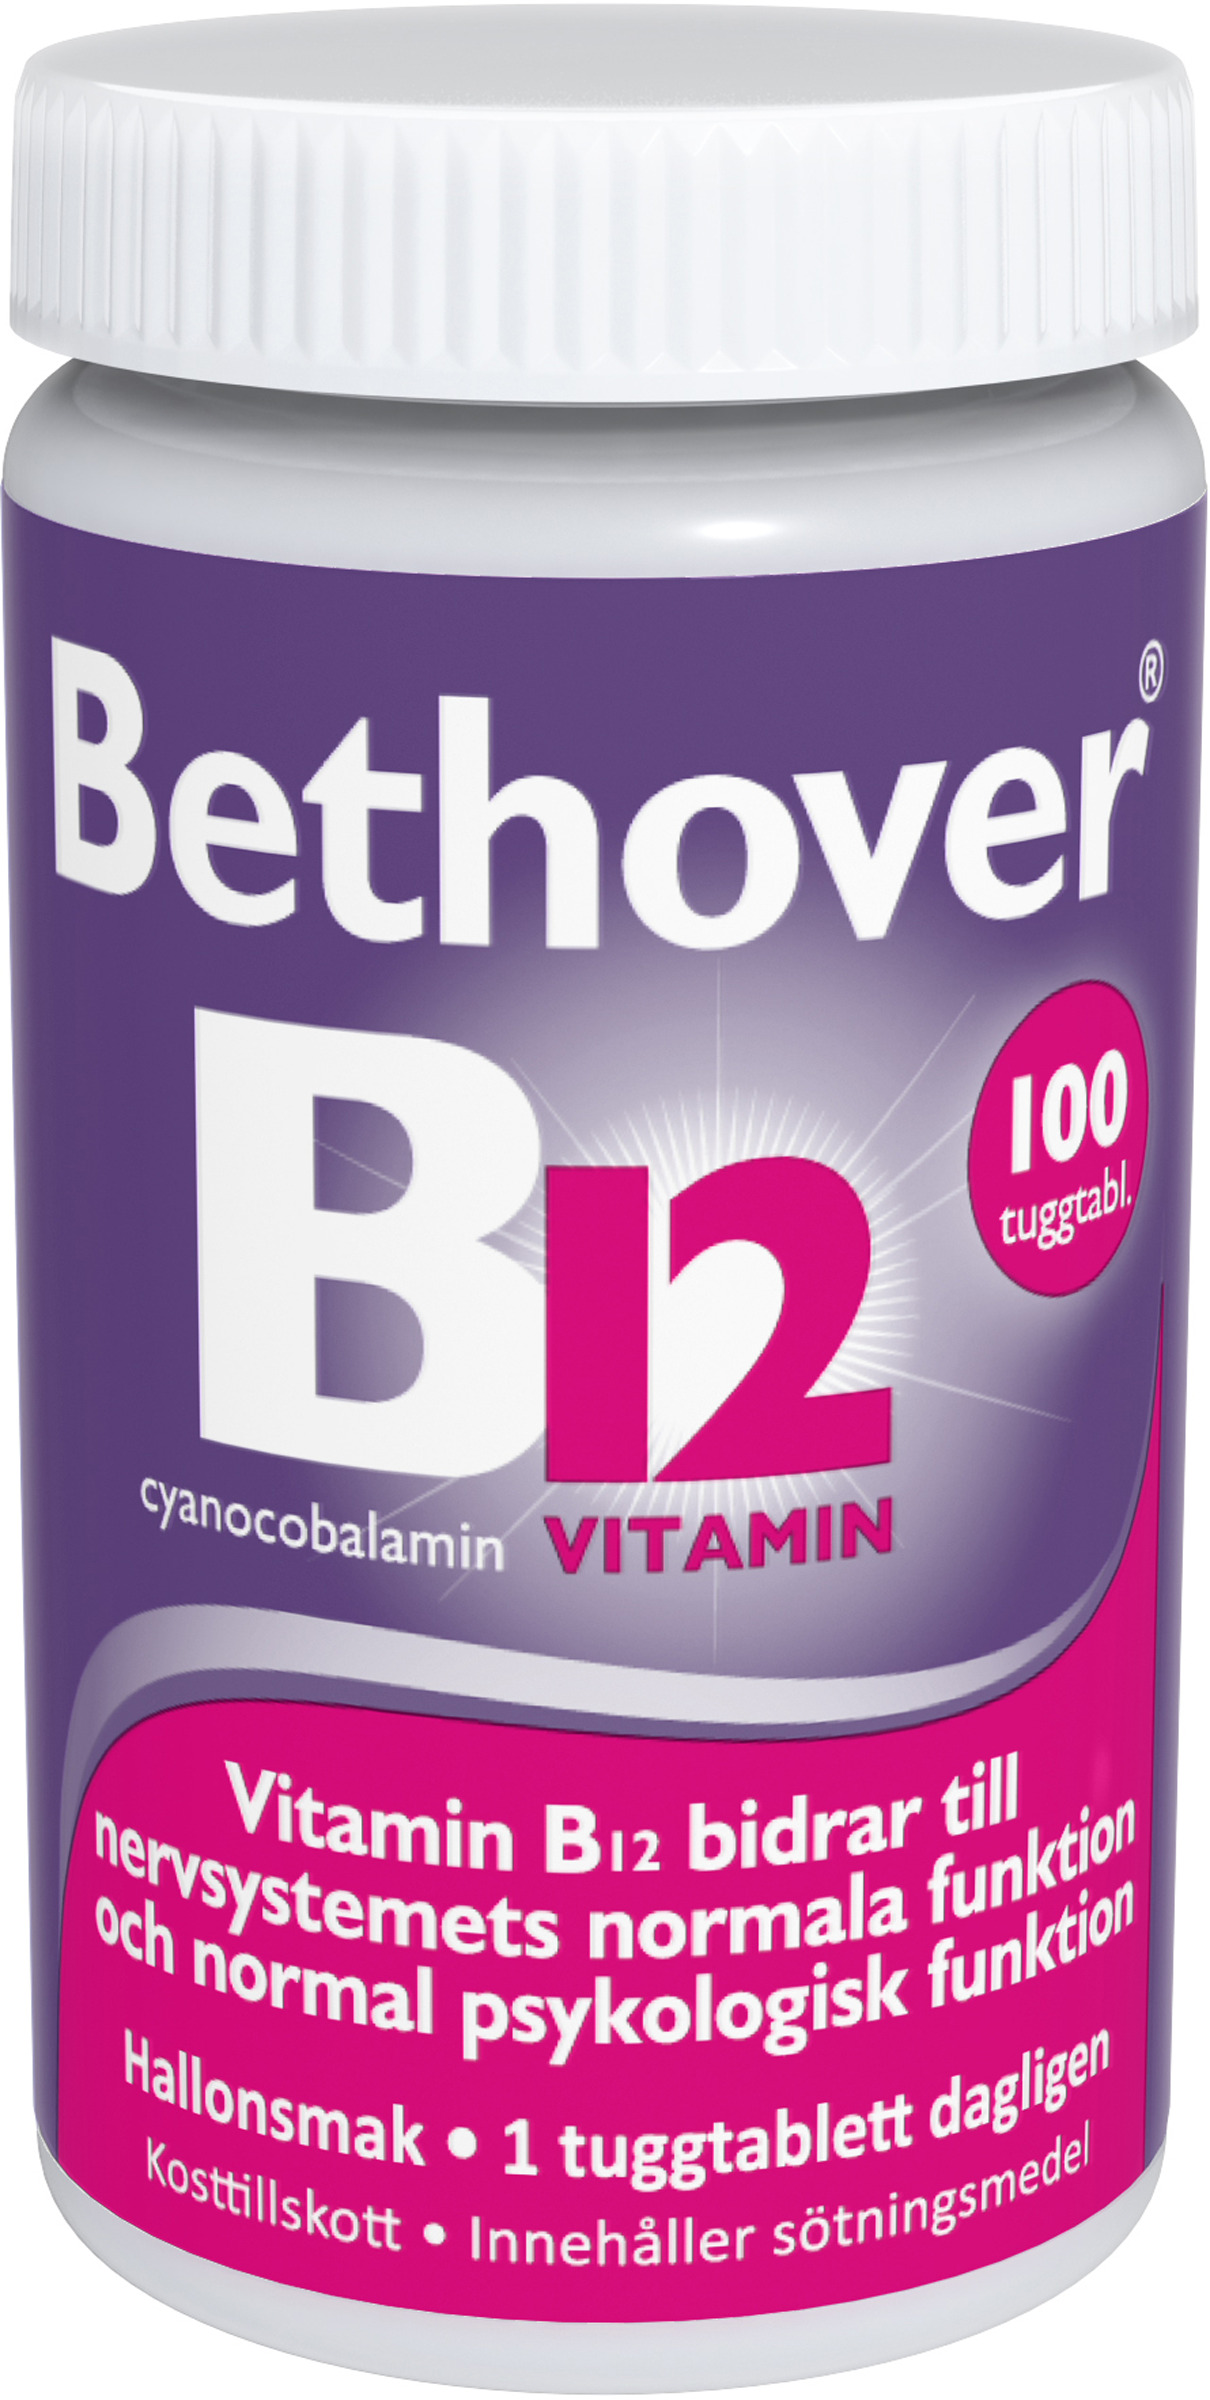 Bethover B-12 Vitamin 100 st